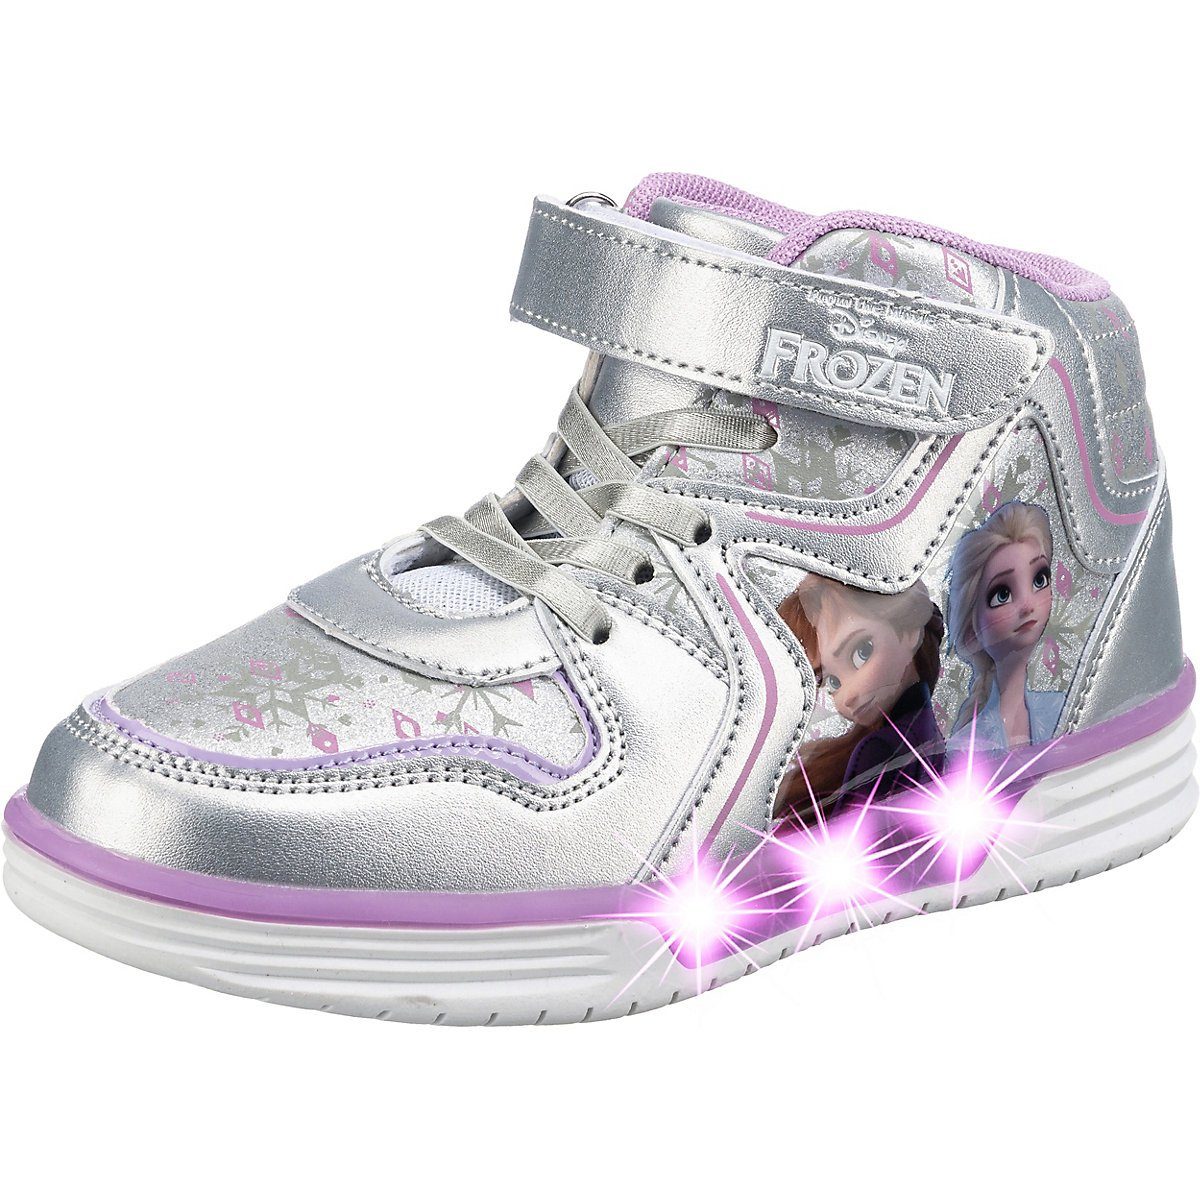 Schuhe Alle Sneaker Disney Frozen Disney Die Eiskönigin Sneakers High Blinkies für Sneaker